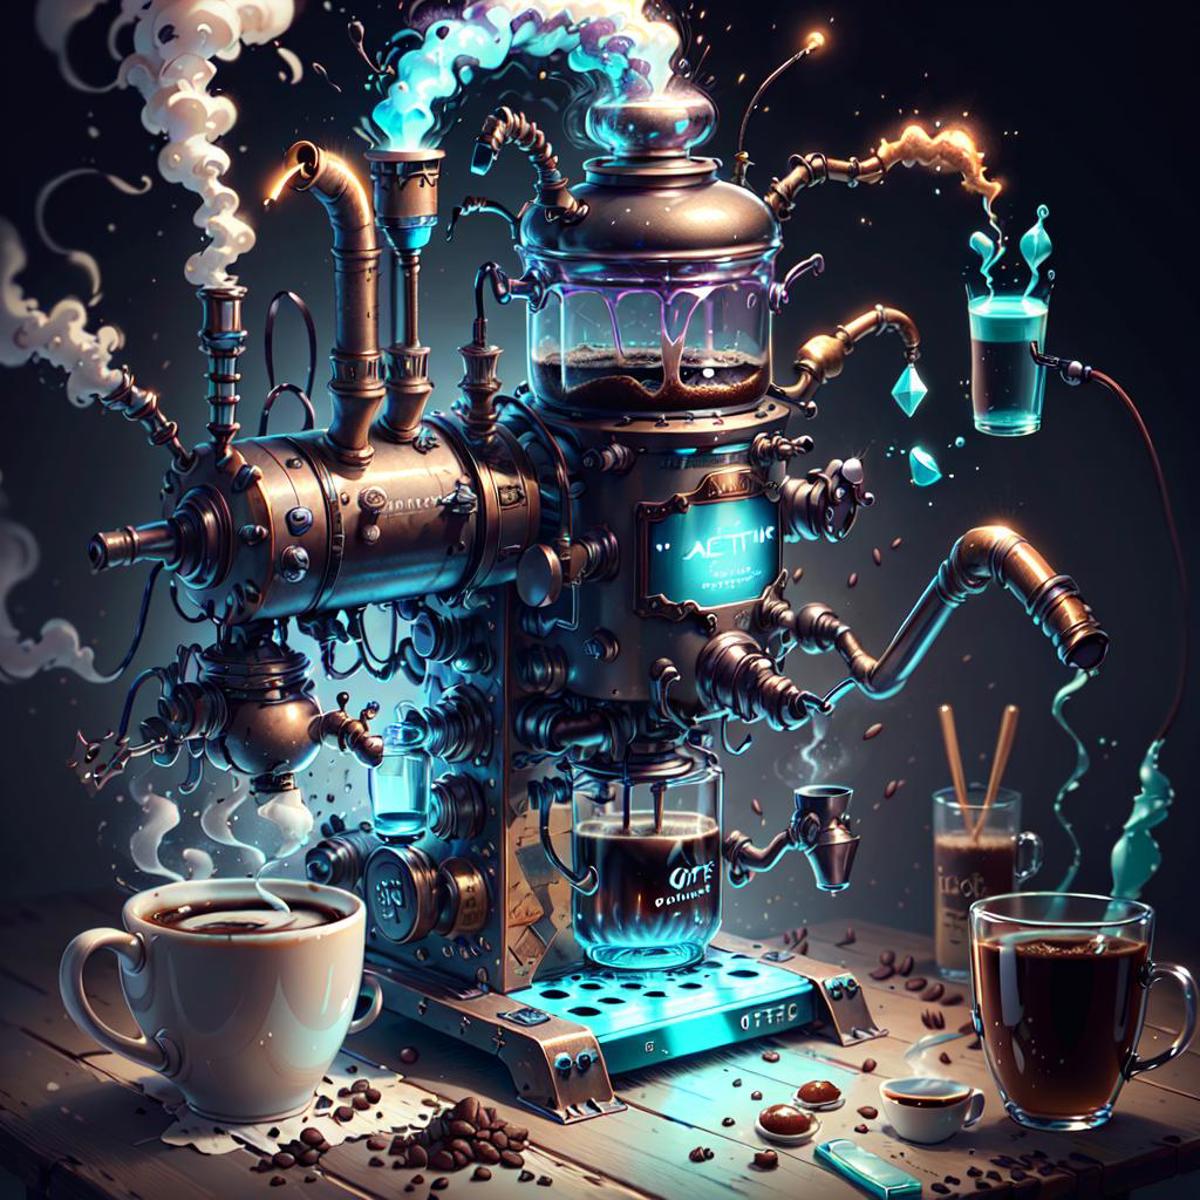 AI model image by DreamExplorer